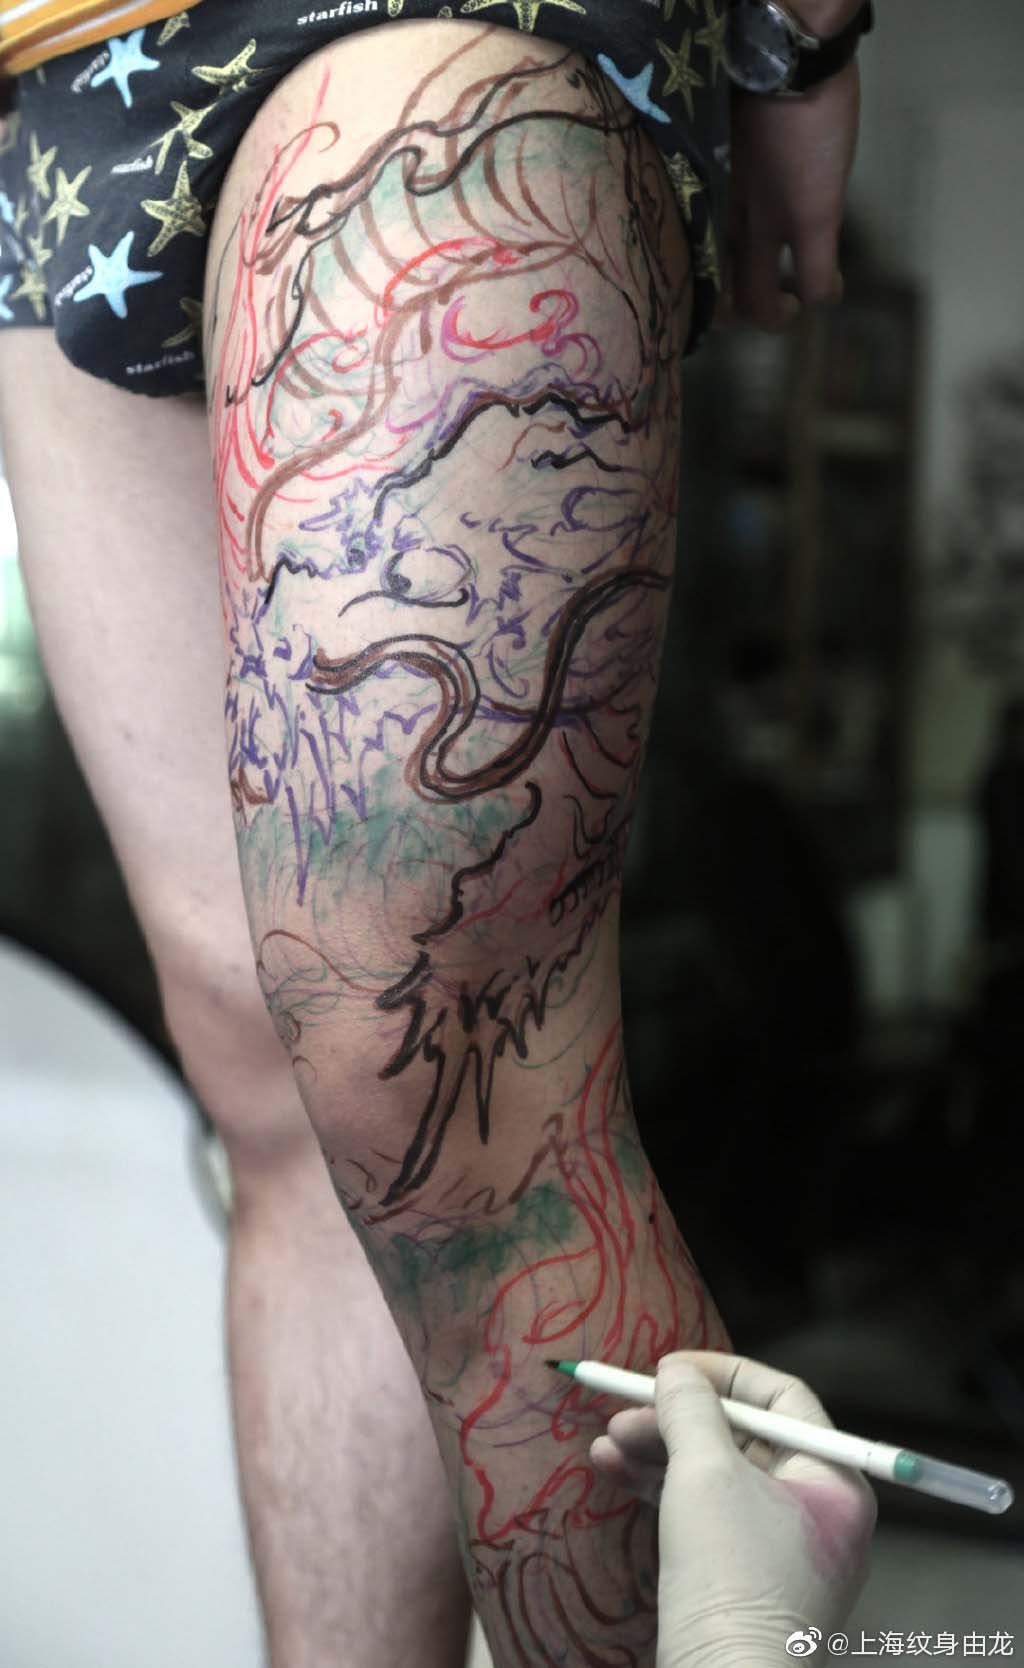 ShanghaiTattoo916 3 Zhuo Dan Ting Tattoo work 卓丹婷纹身作品 彩色花腿龙纹身